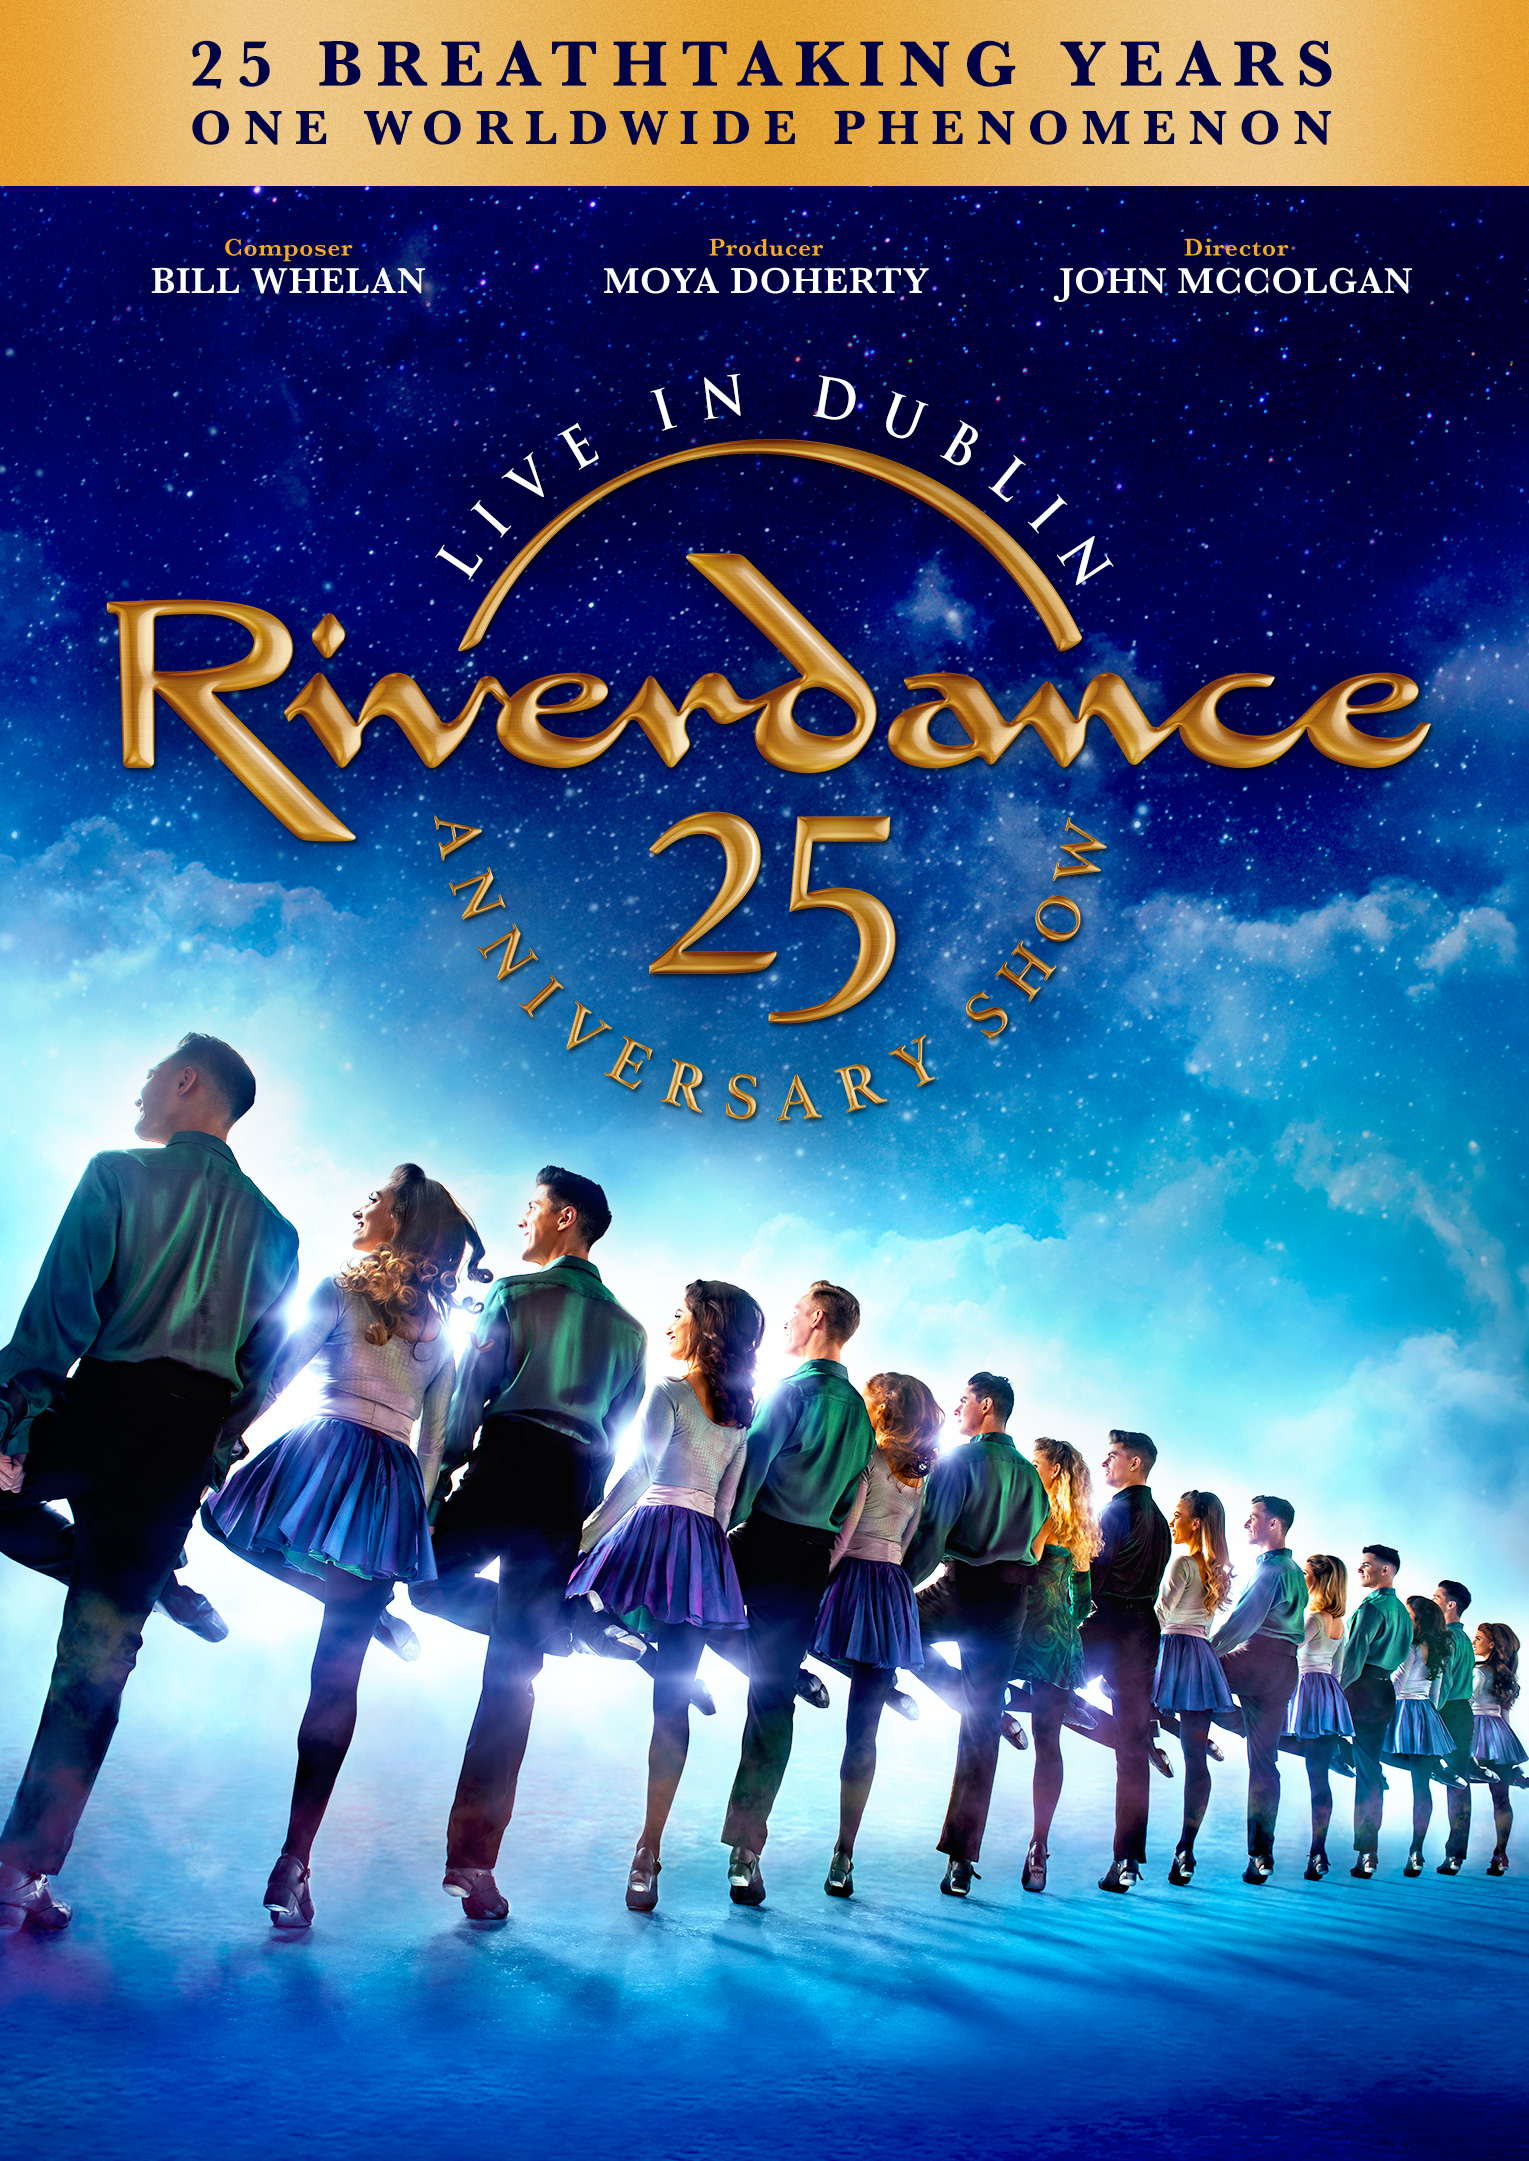 Riverdance The 25th Anniversary Show Live In Dublin Wienerworld